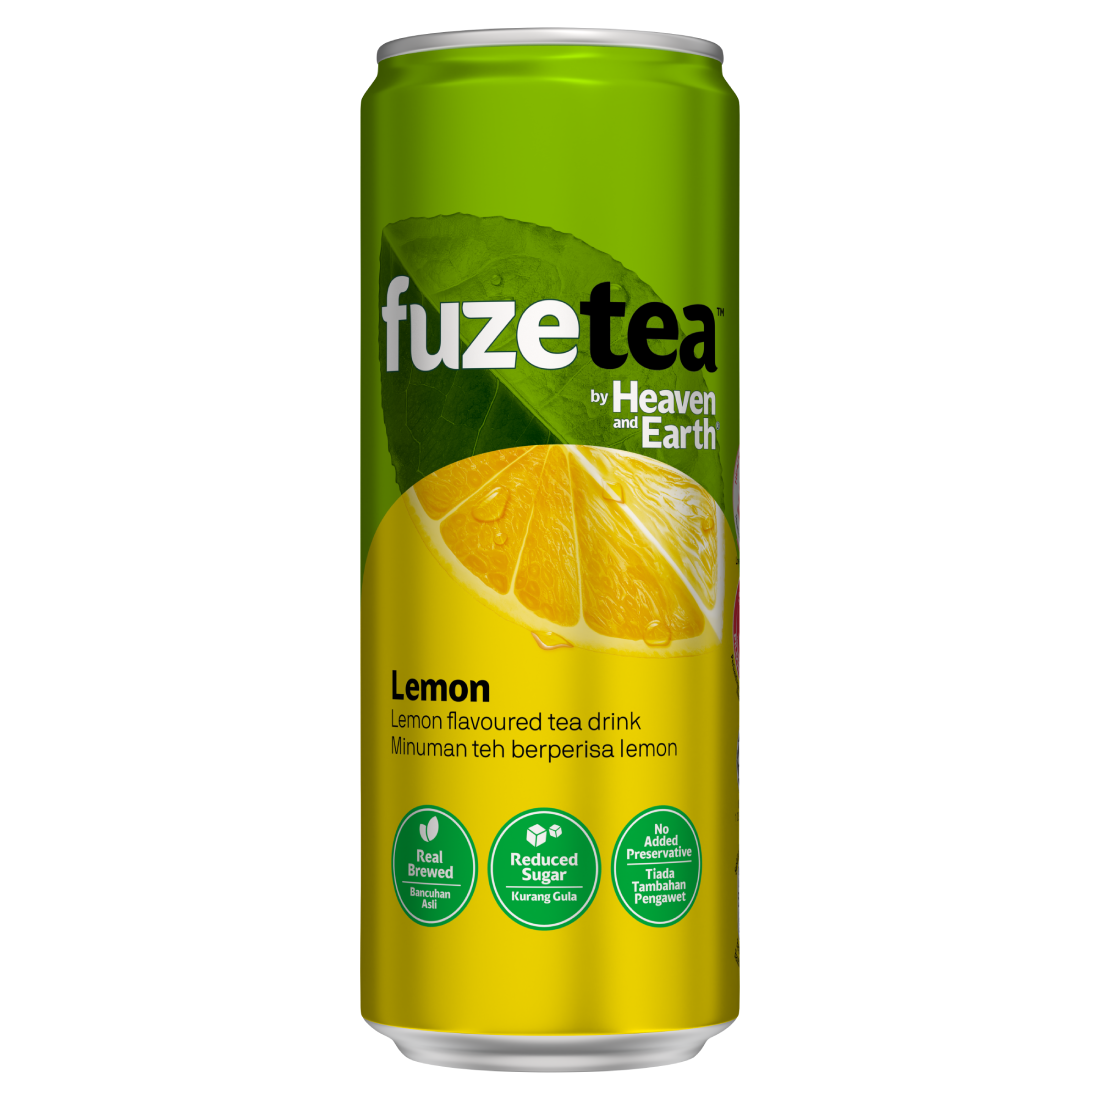 Fuze Tea Ice Lemon Tea can